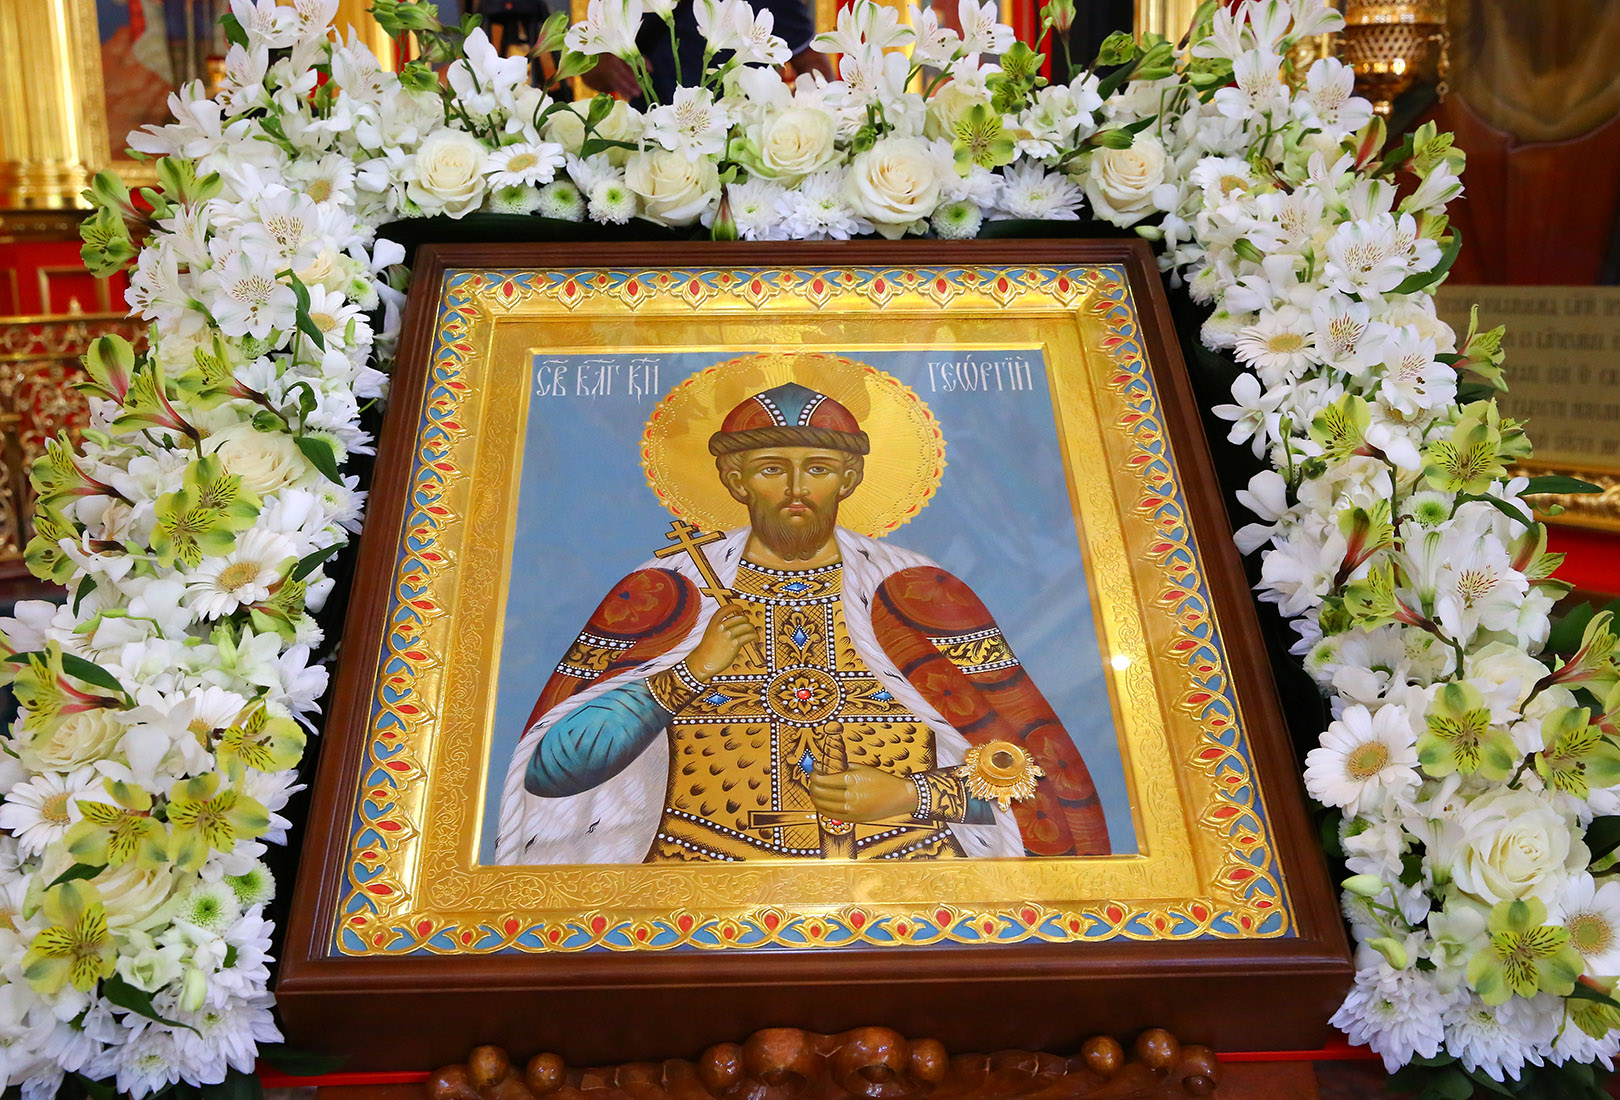 Мощи святого князя Георгия Всеволодовича будут находиться в Нижнем Новгороде до 1 сентября